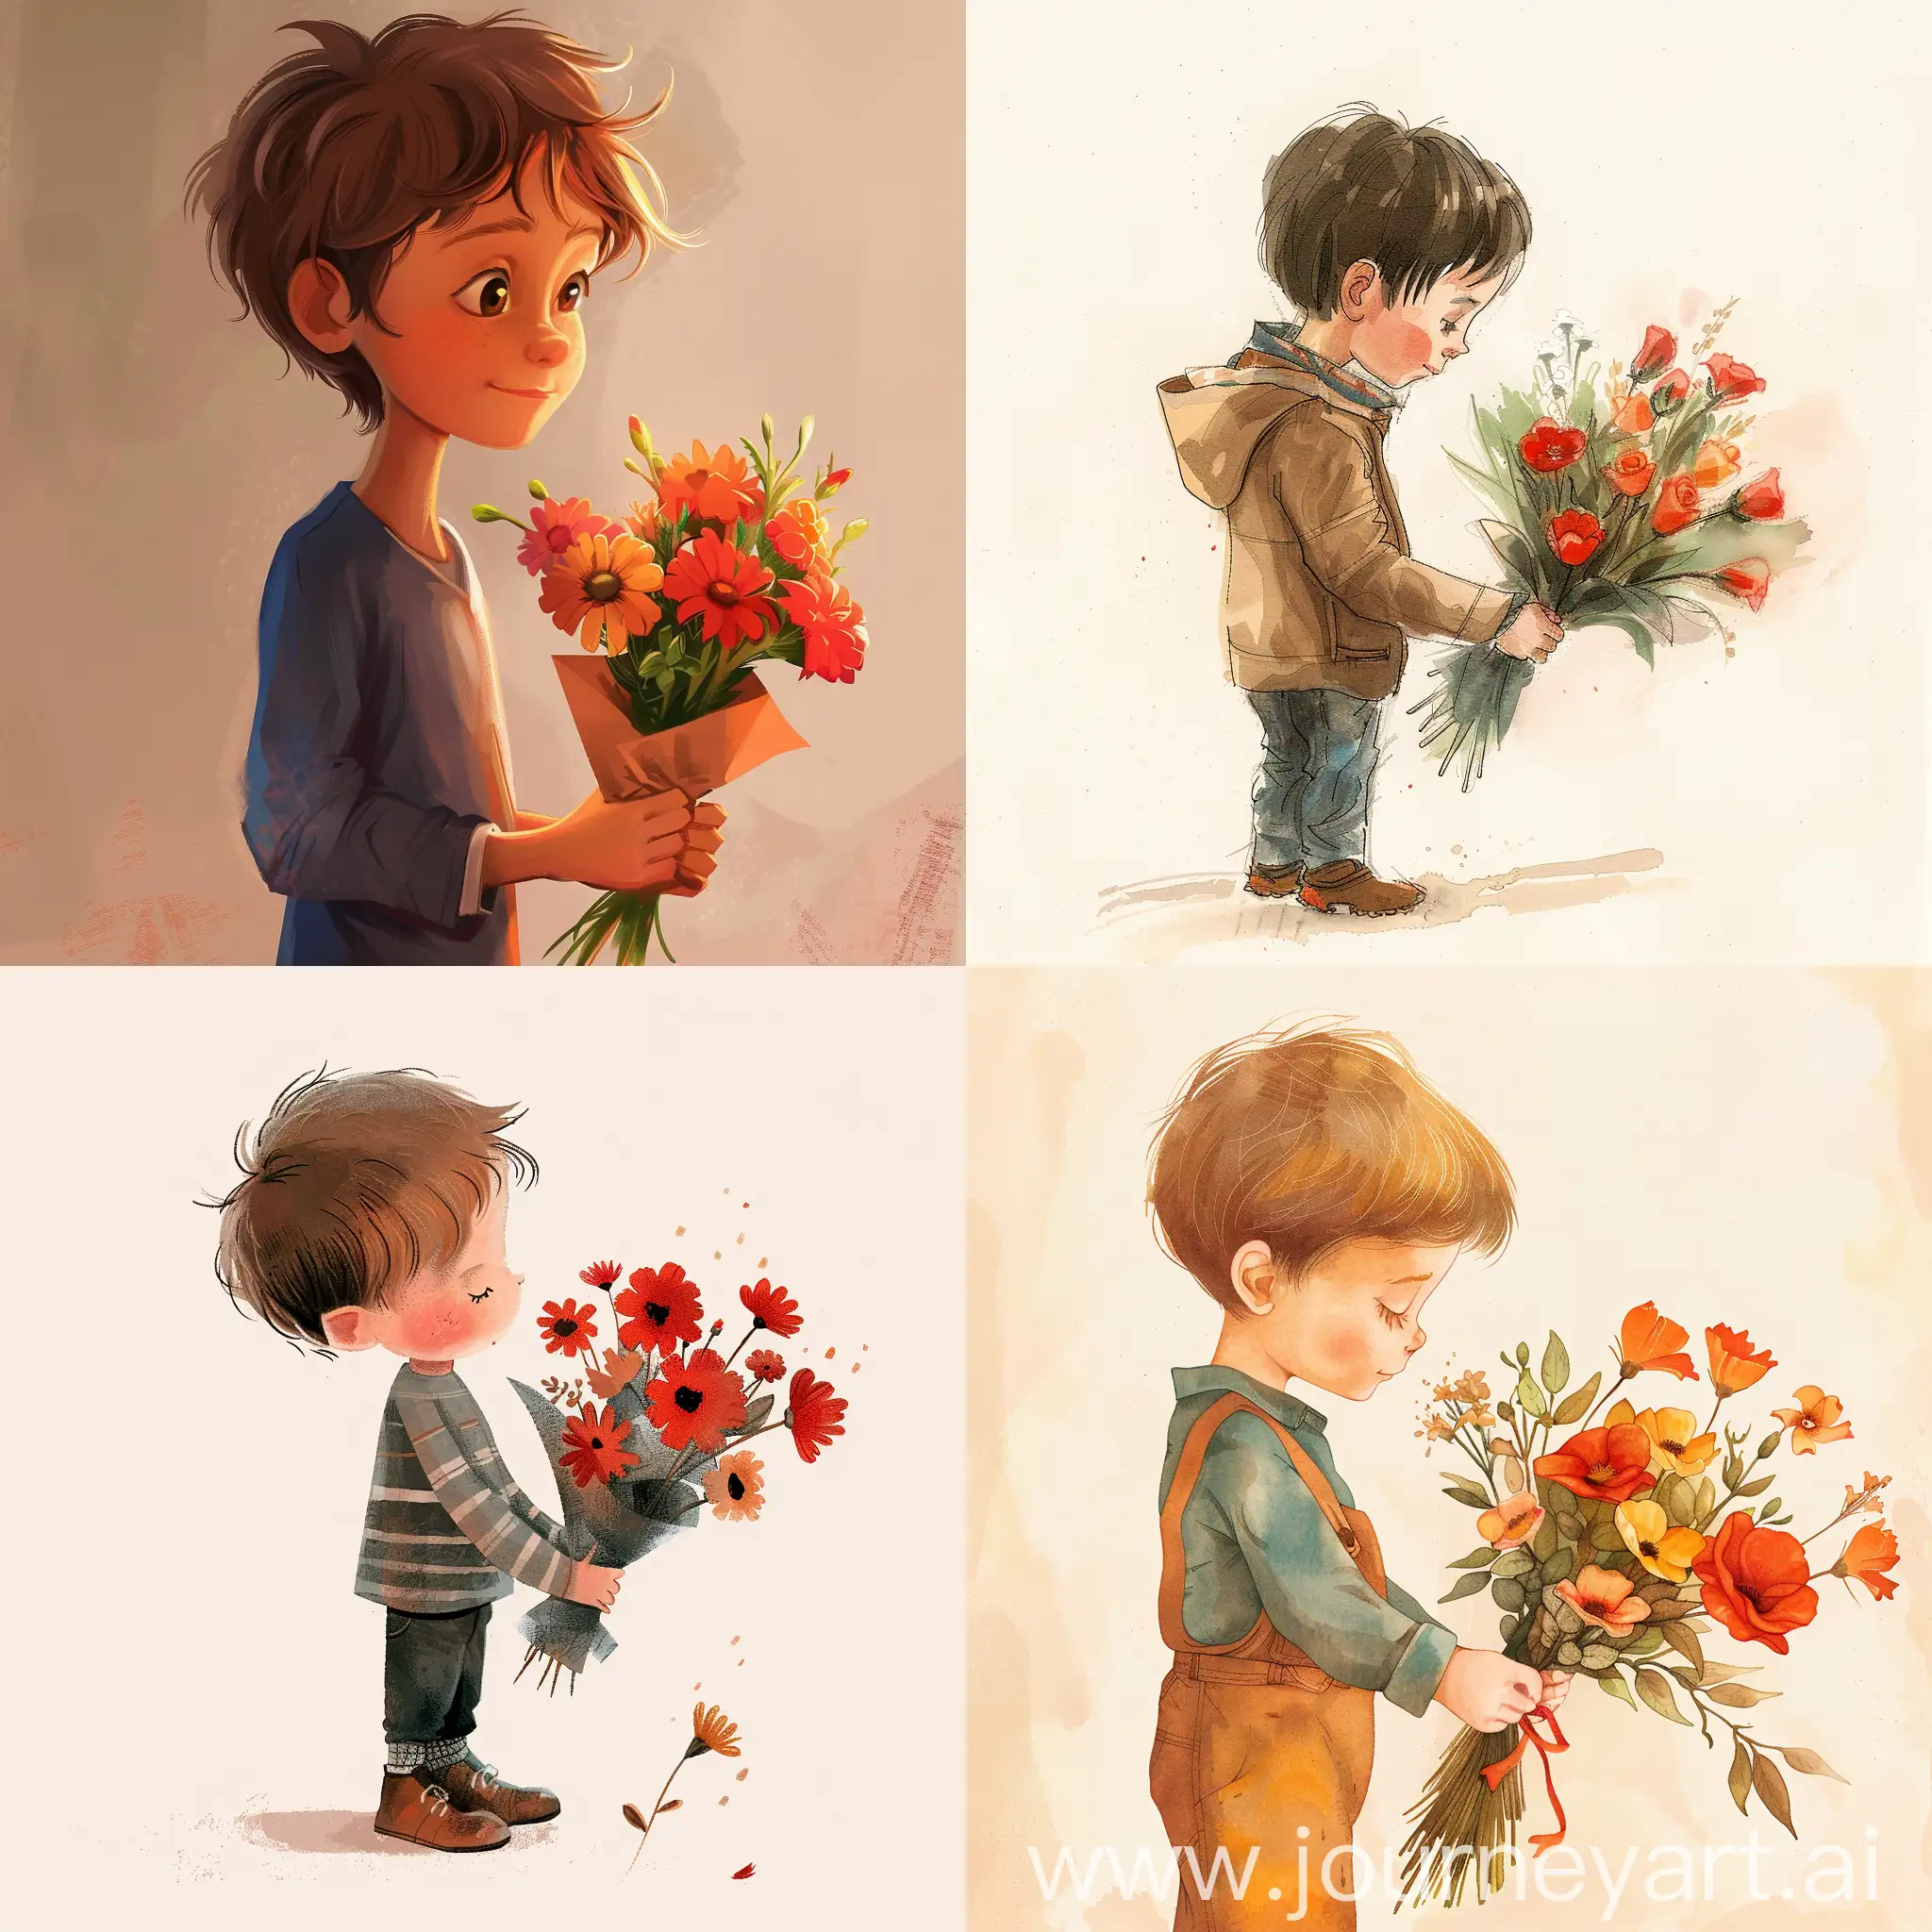 Young-Boy-Sending-Flowers-Heartwarming-Gesture-Captured-in-AI-Art